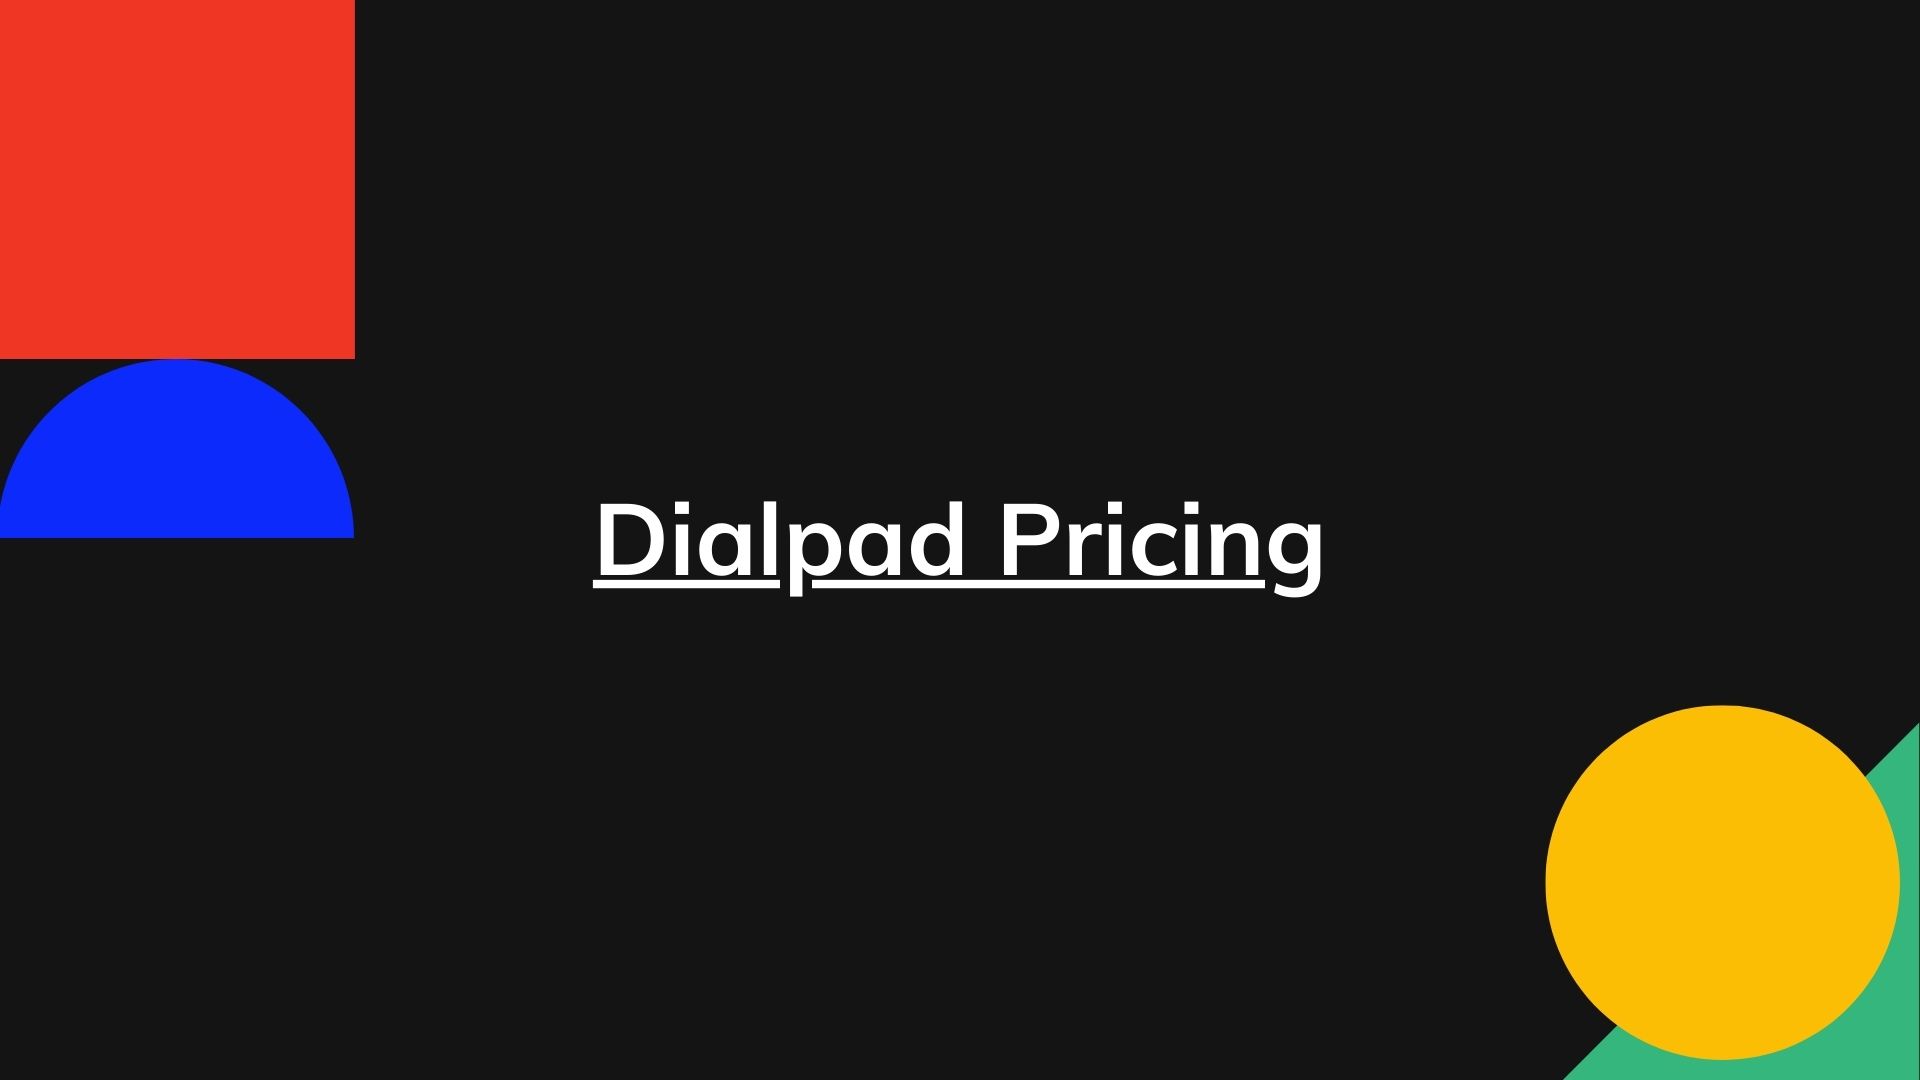 dialpad pricing